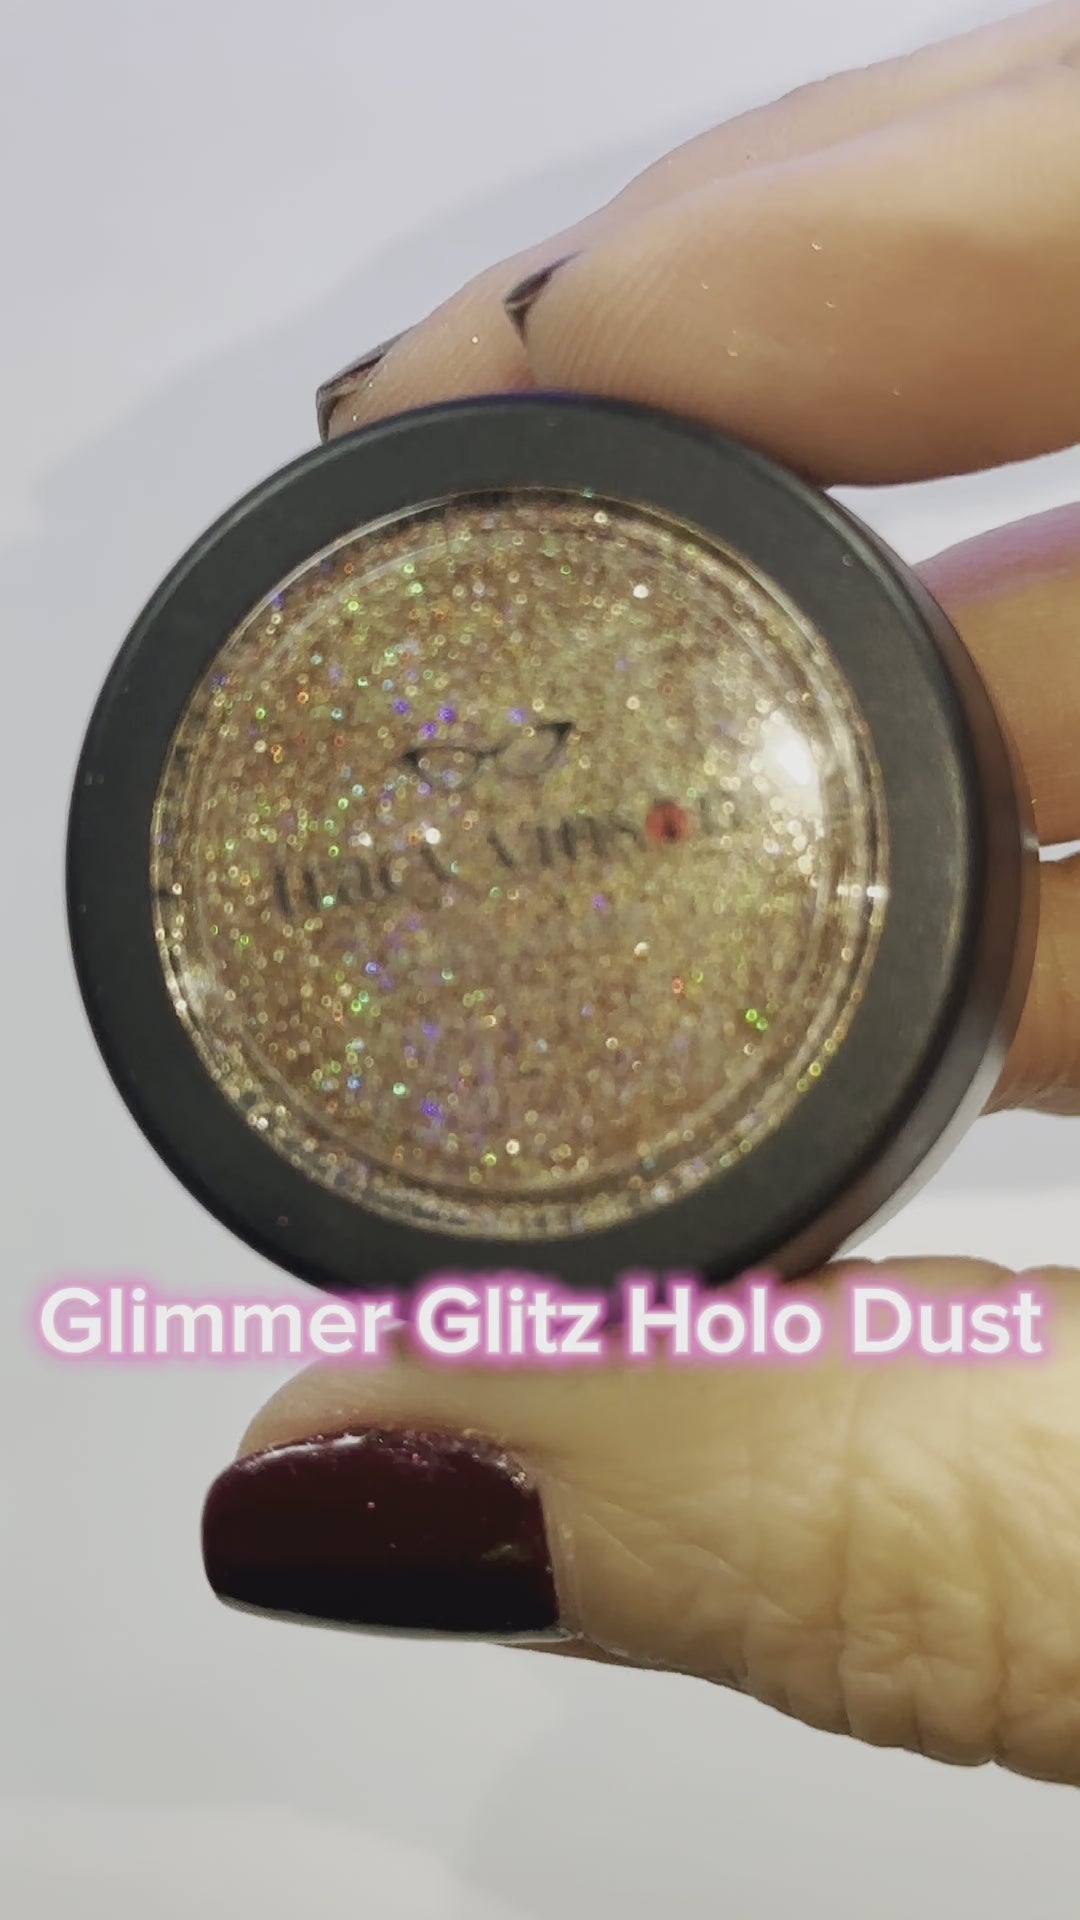 Royal Blush -- Glimmer Glitz Holo Dust